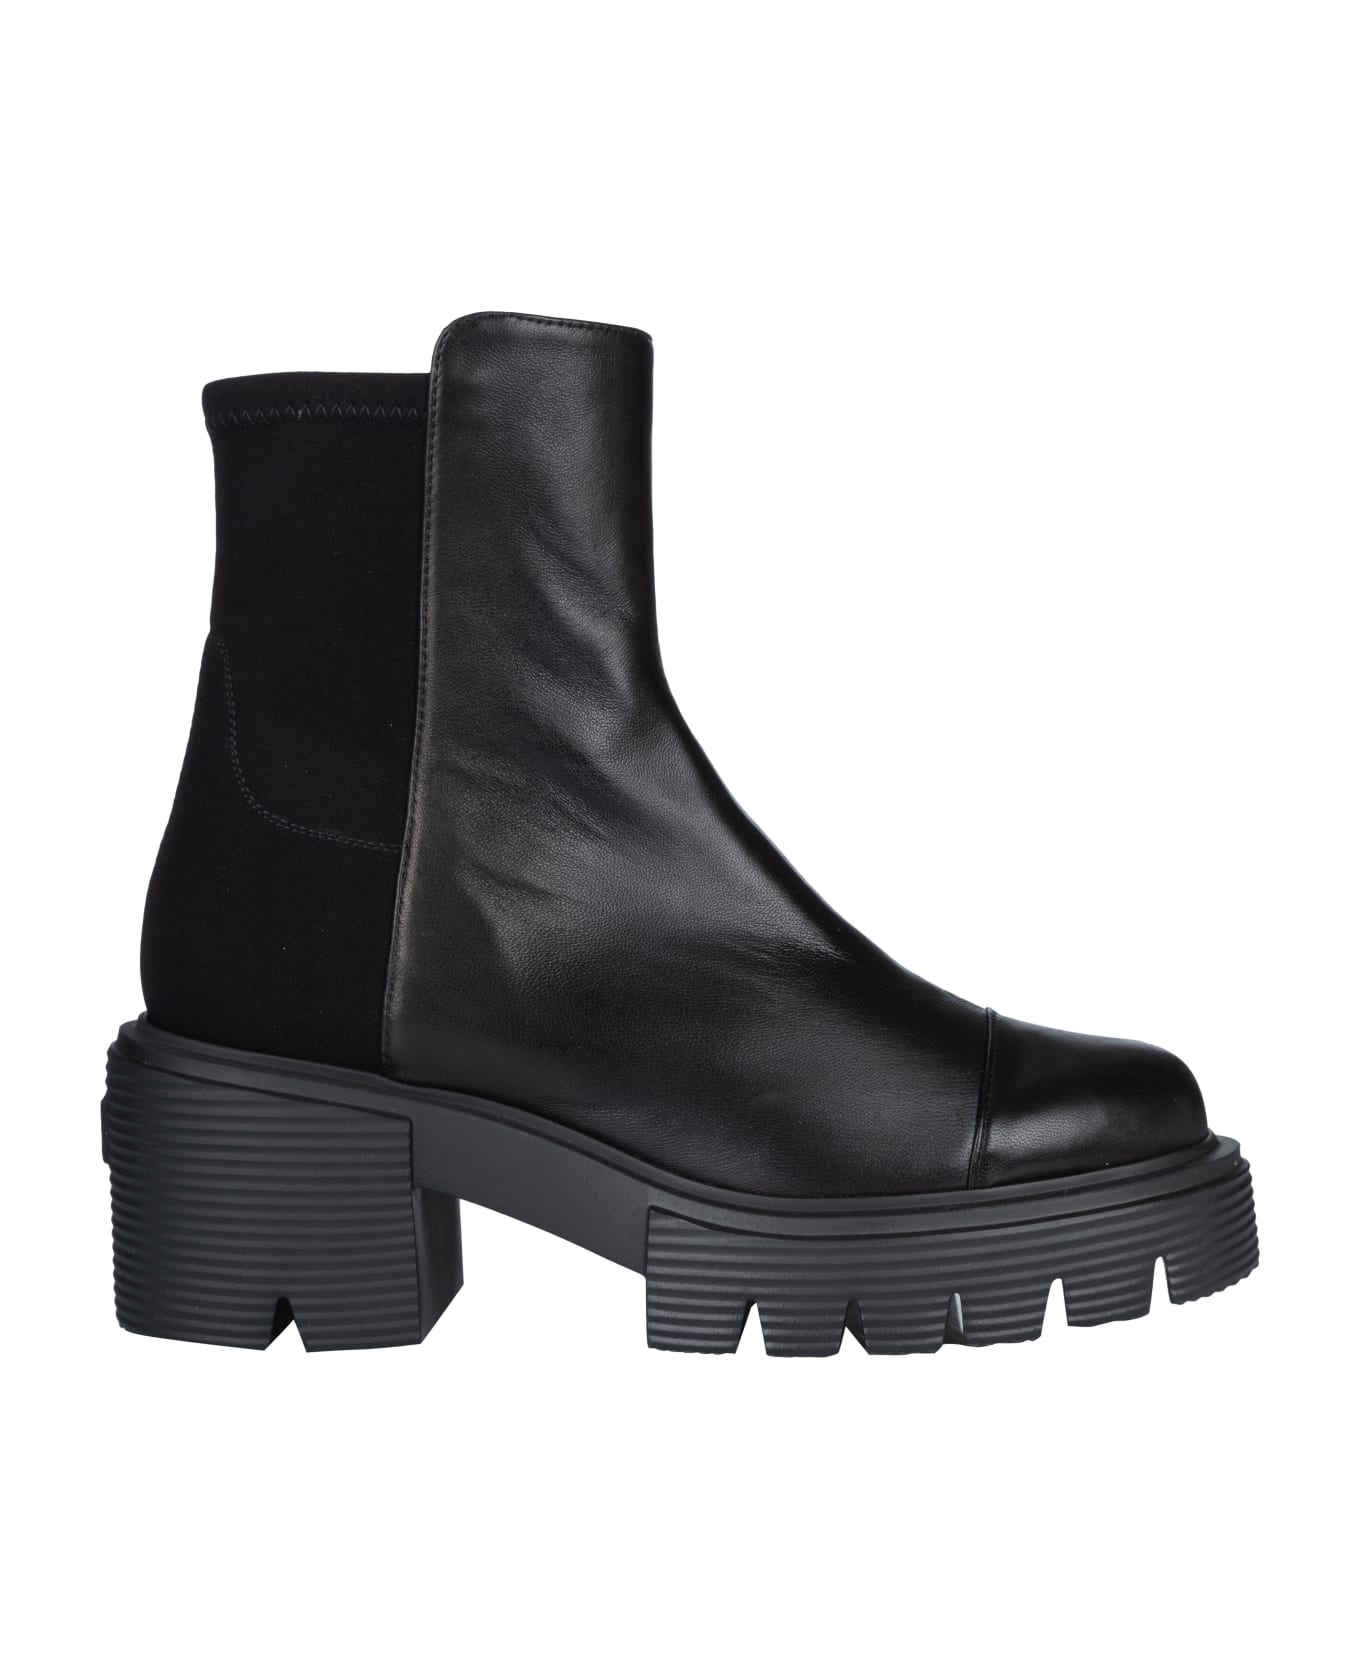 Stuart Weitzman 5050 Soho Boots - Black ブーツ